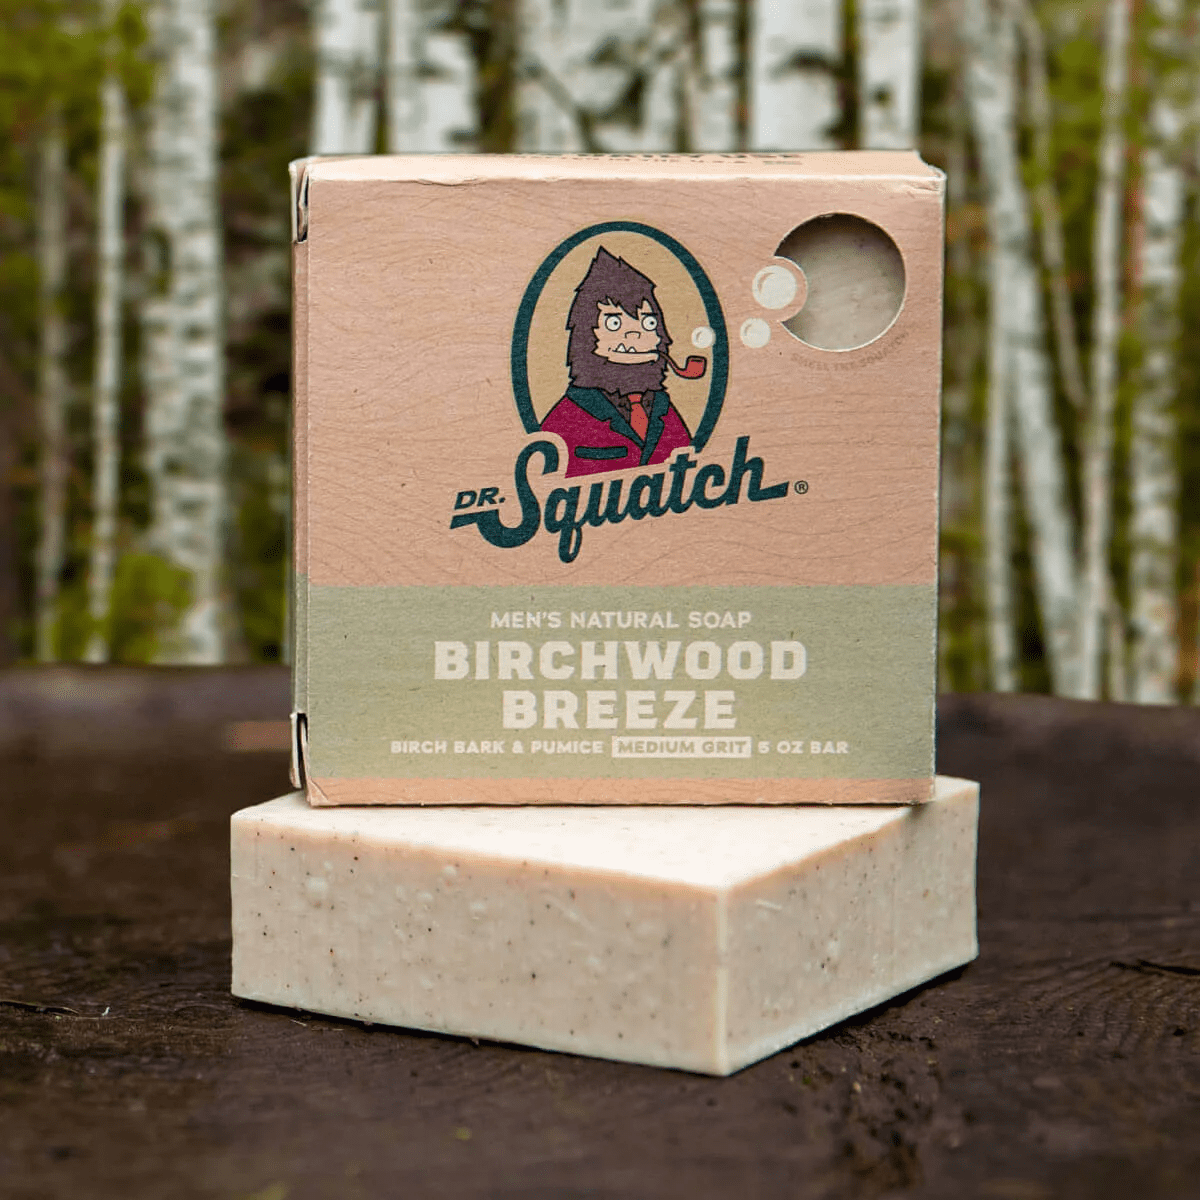 Dr. Squatch BIRCHWOOD BREEZE 3 Bar Pack - Cold Processed Soap Made For Men  - Medium Grit - Natural O…See more Dr. Squatch BIRCHWOOD BREEZE 3 Bar Pack